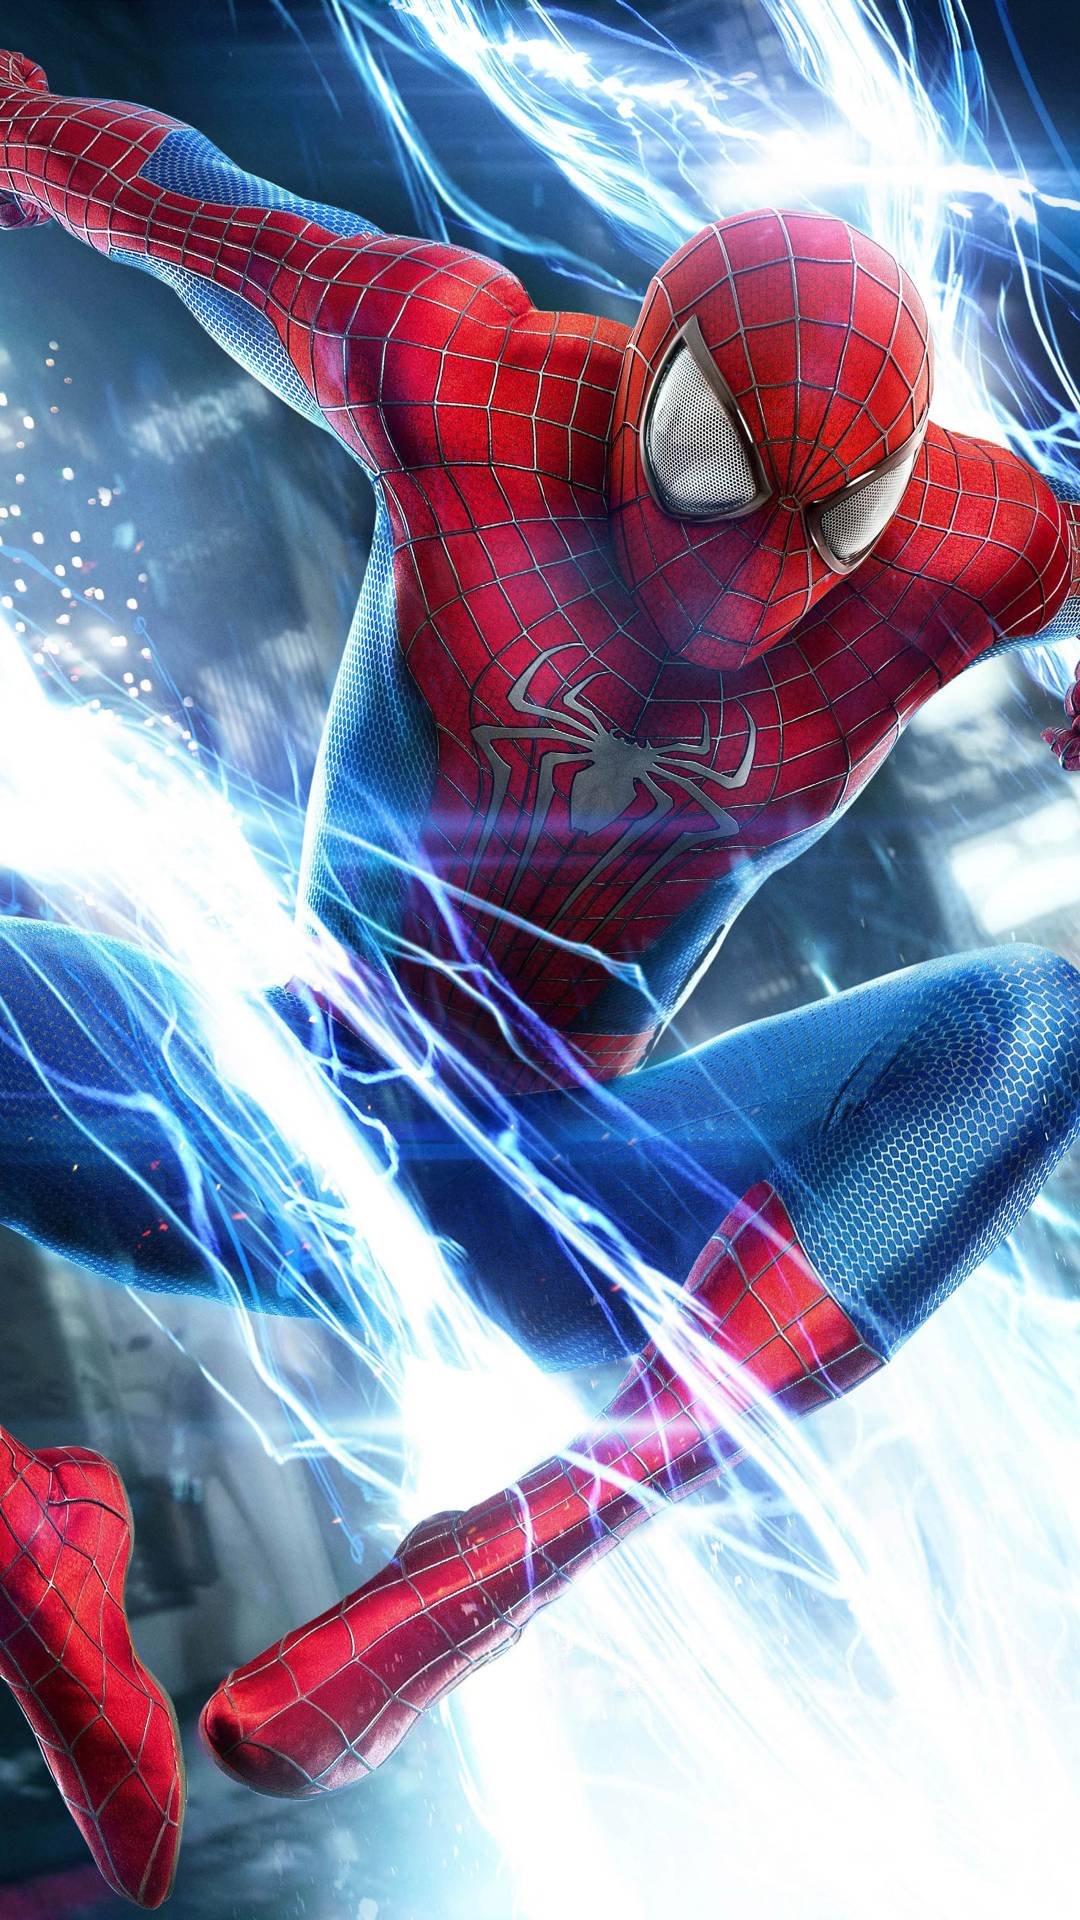 Spider-Man Into The Spider verse wallpaper/lockscreen | Animated spider,  Spider verse, Spiderman